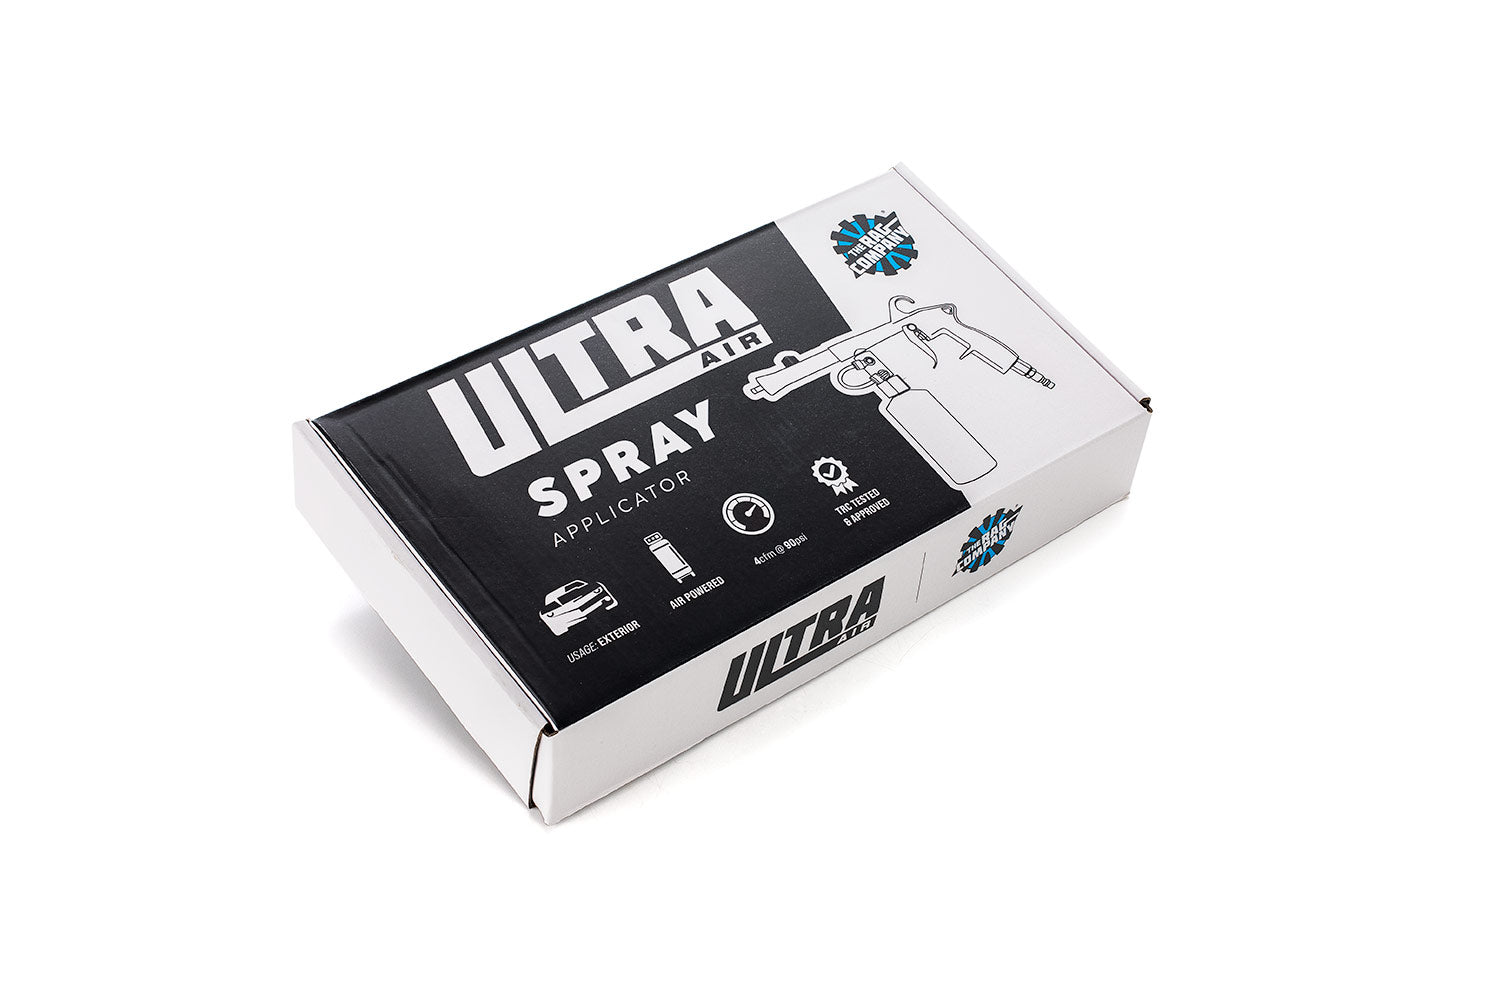 The Rag Company Ultra Air Spray Applicator